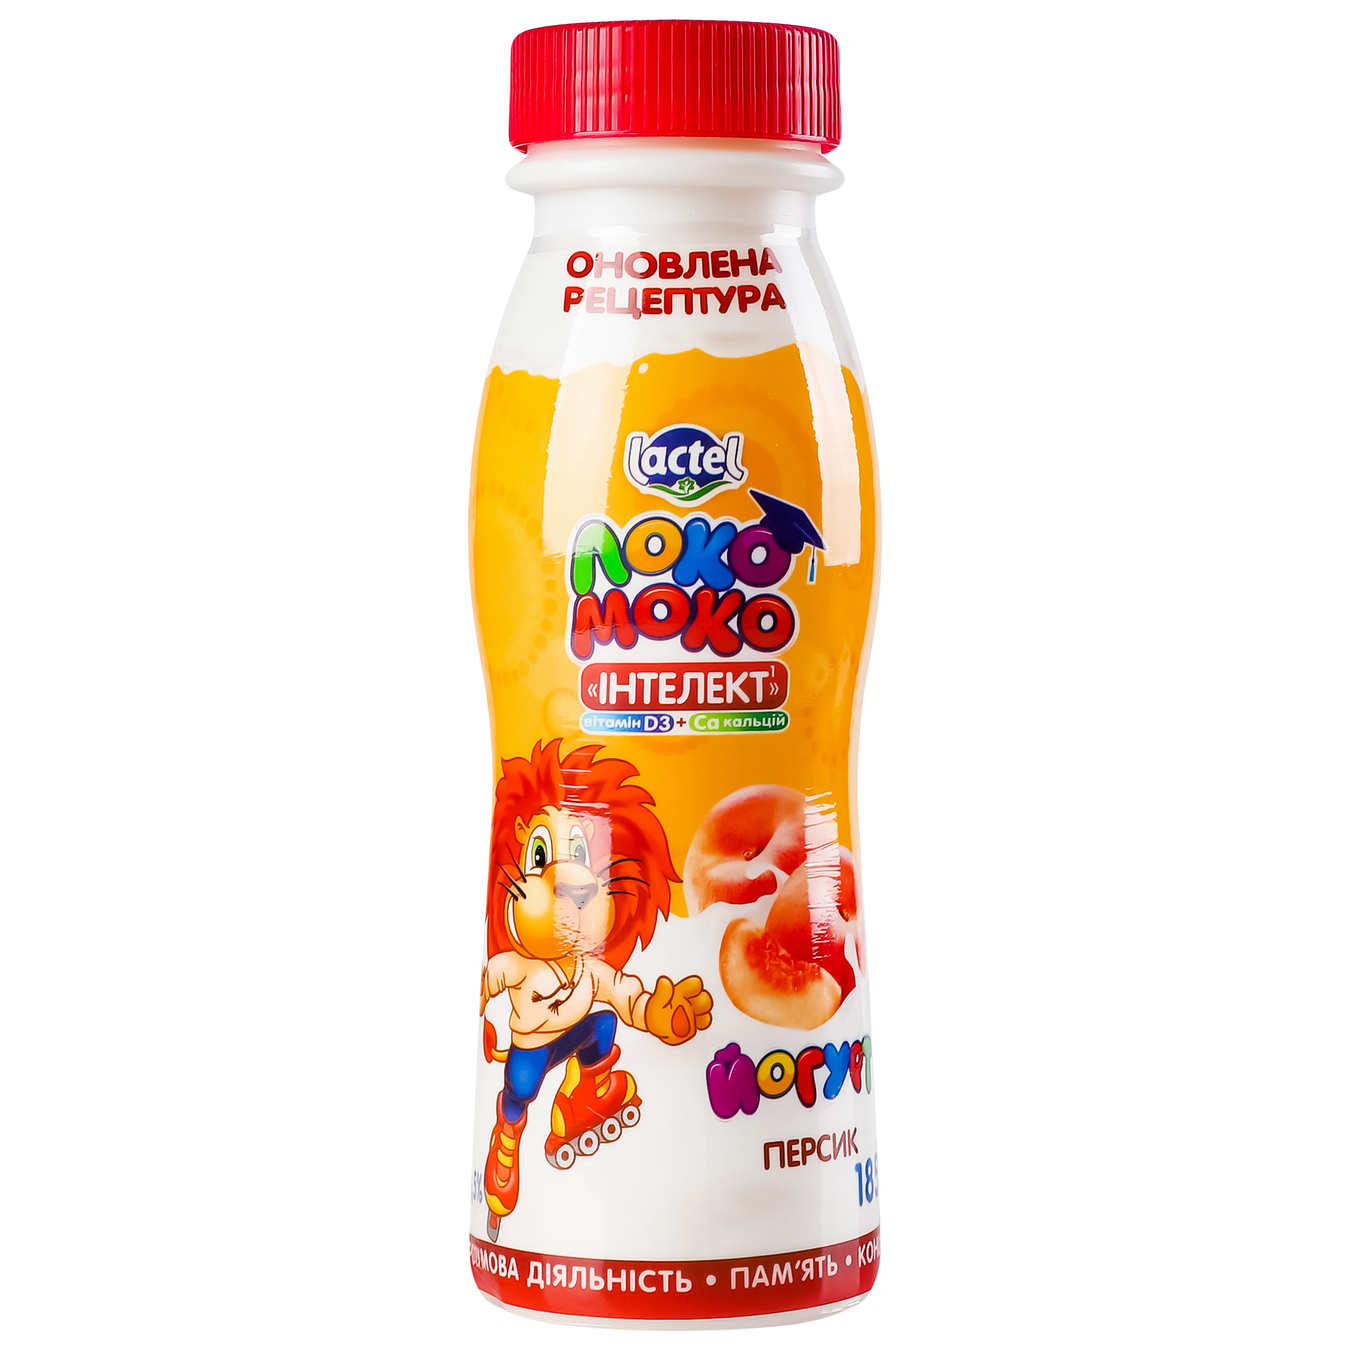 Yogurt Loko Moko with peach filler with Omega 3 calcium and vitamin D3 1.5%